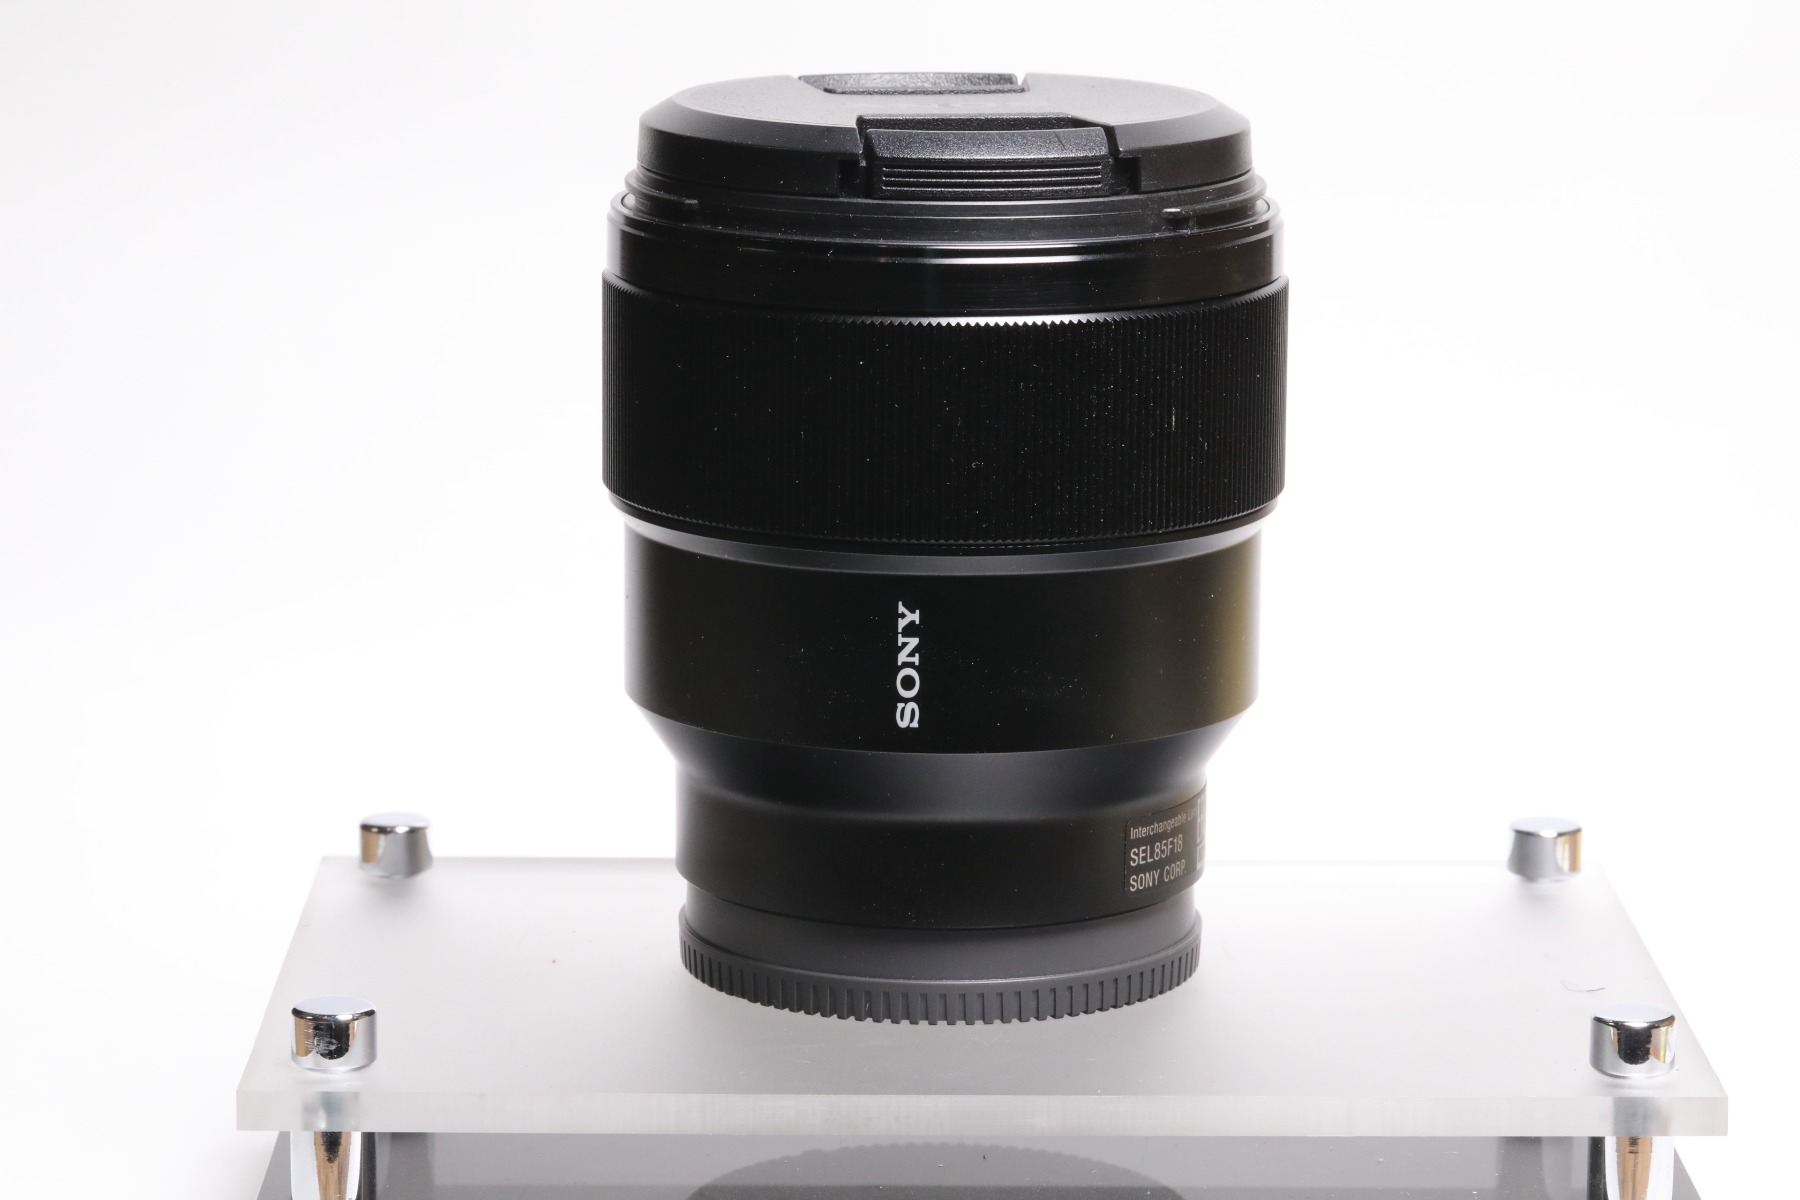 Sony FE 85mm f/1.8 Lens (USED)